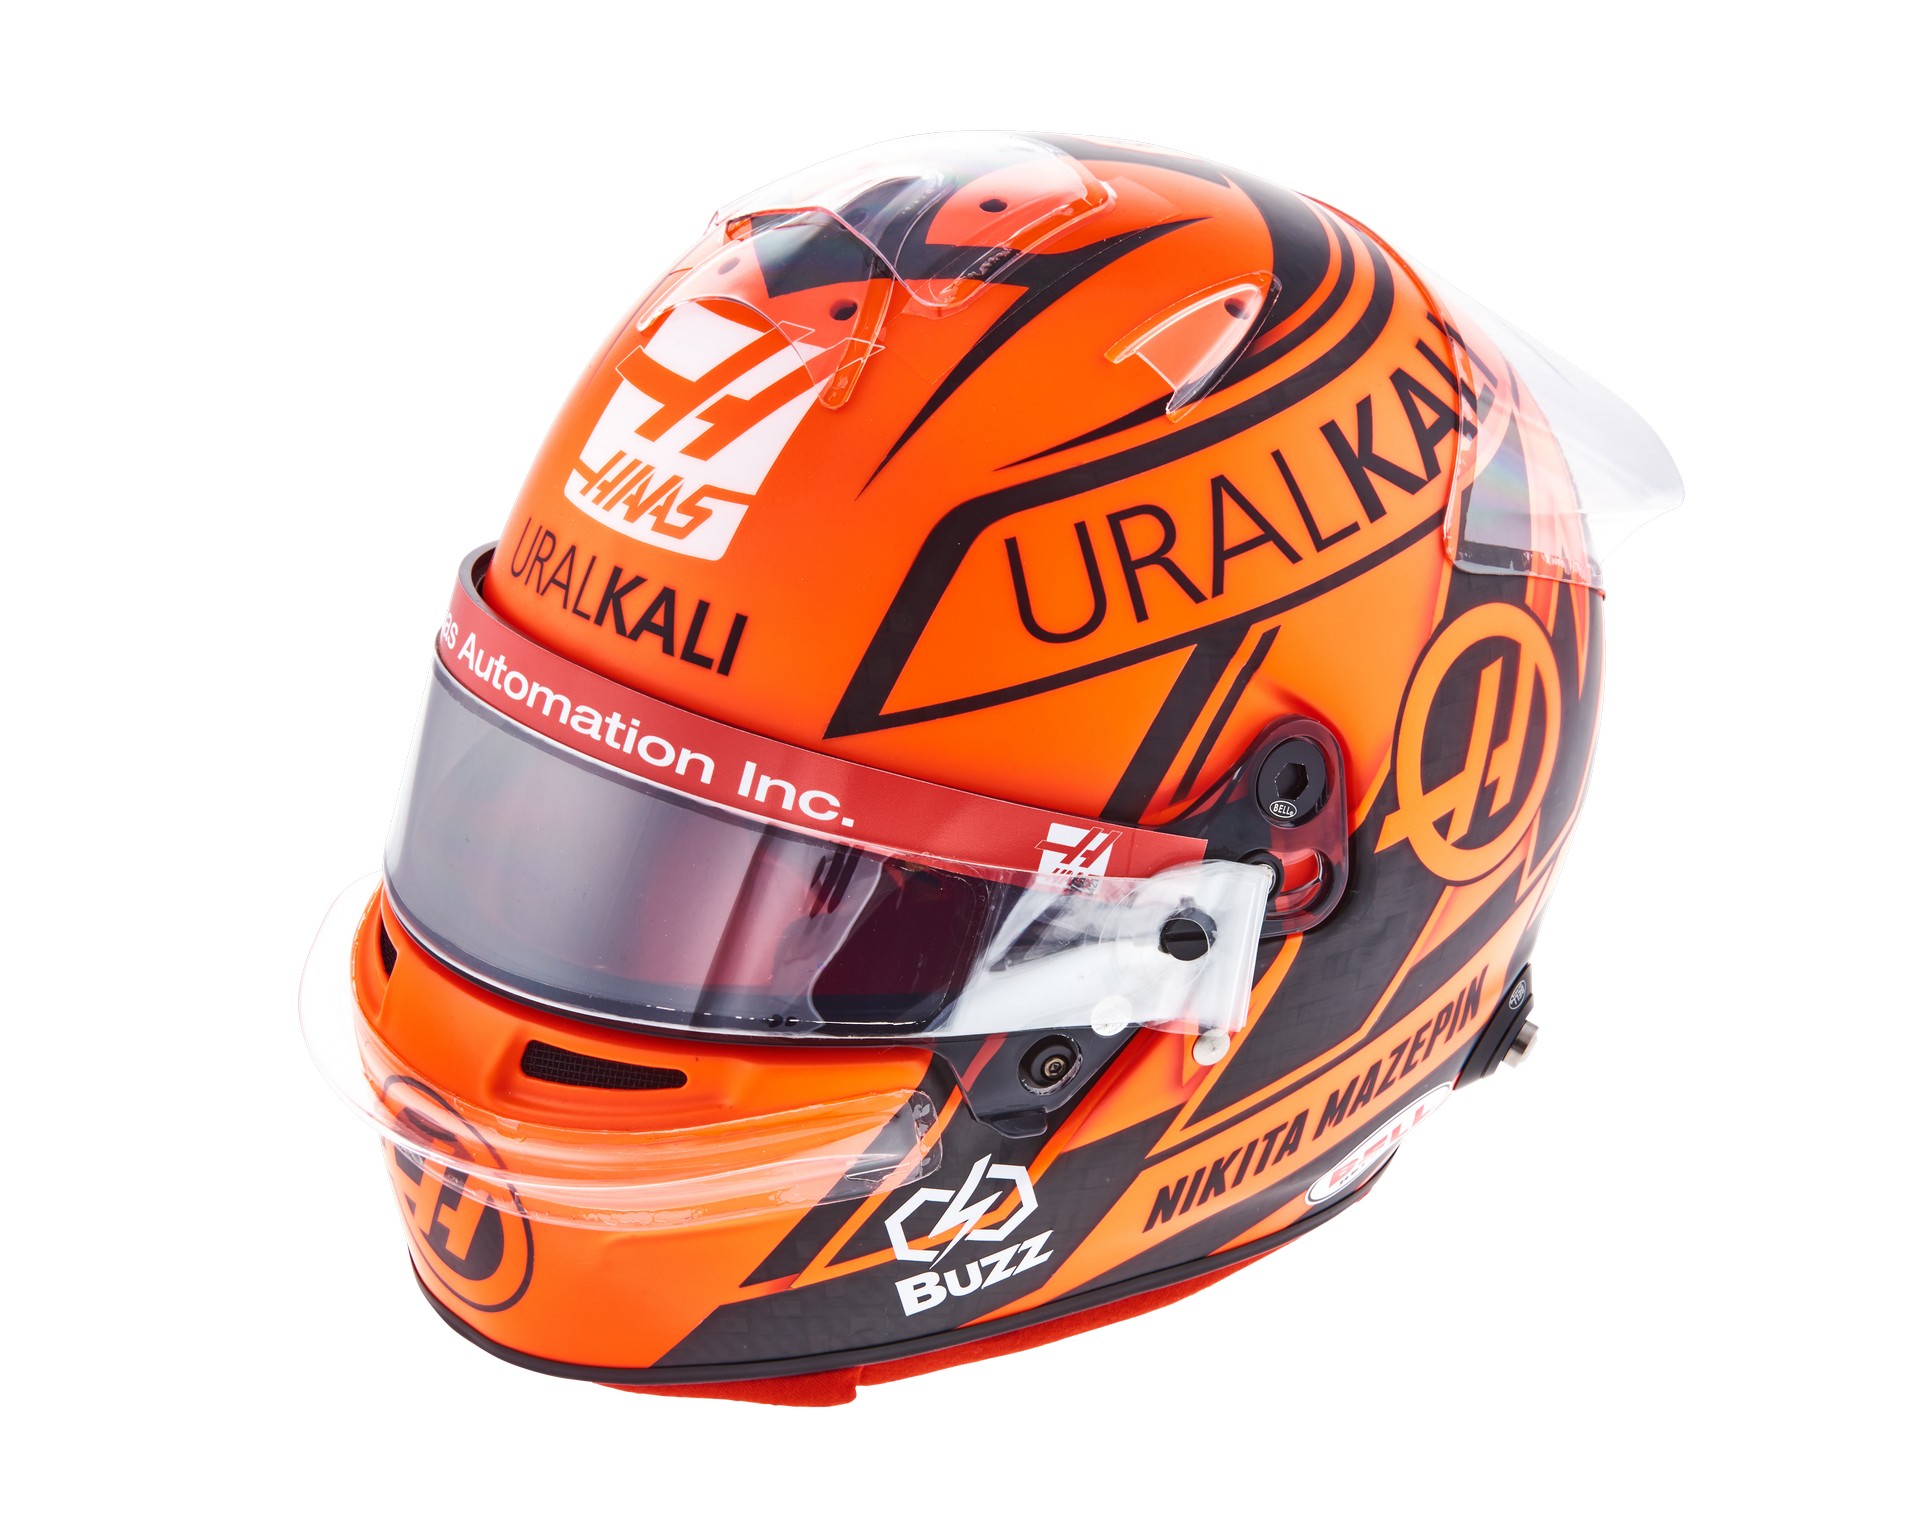 Nikita Mazepin’s 2021 F1 helmet